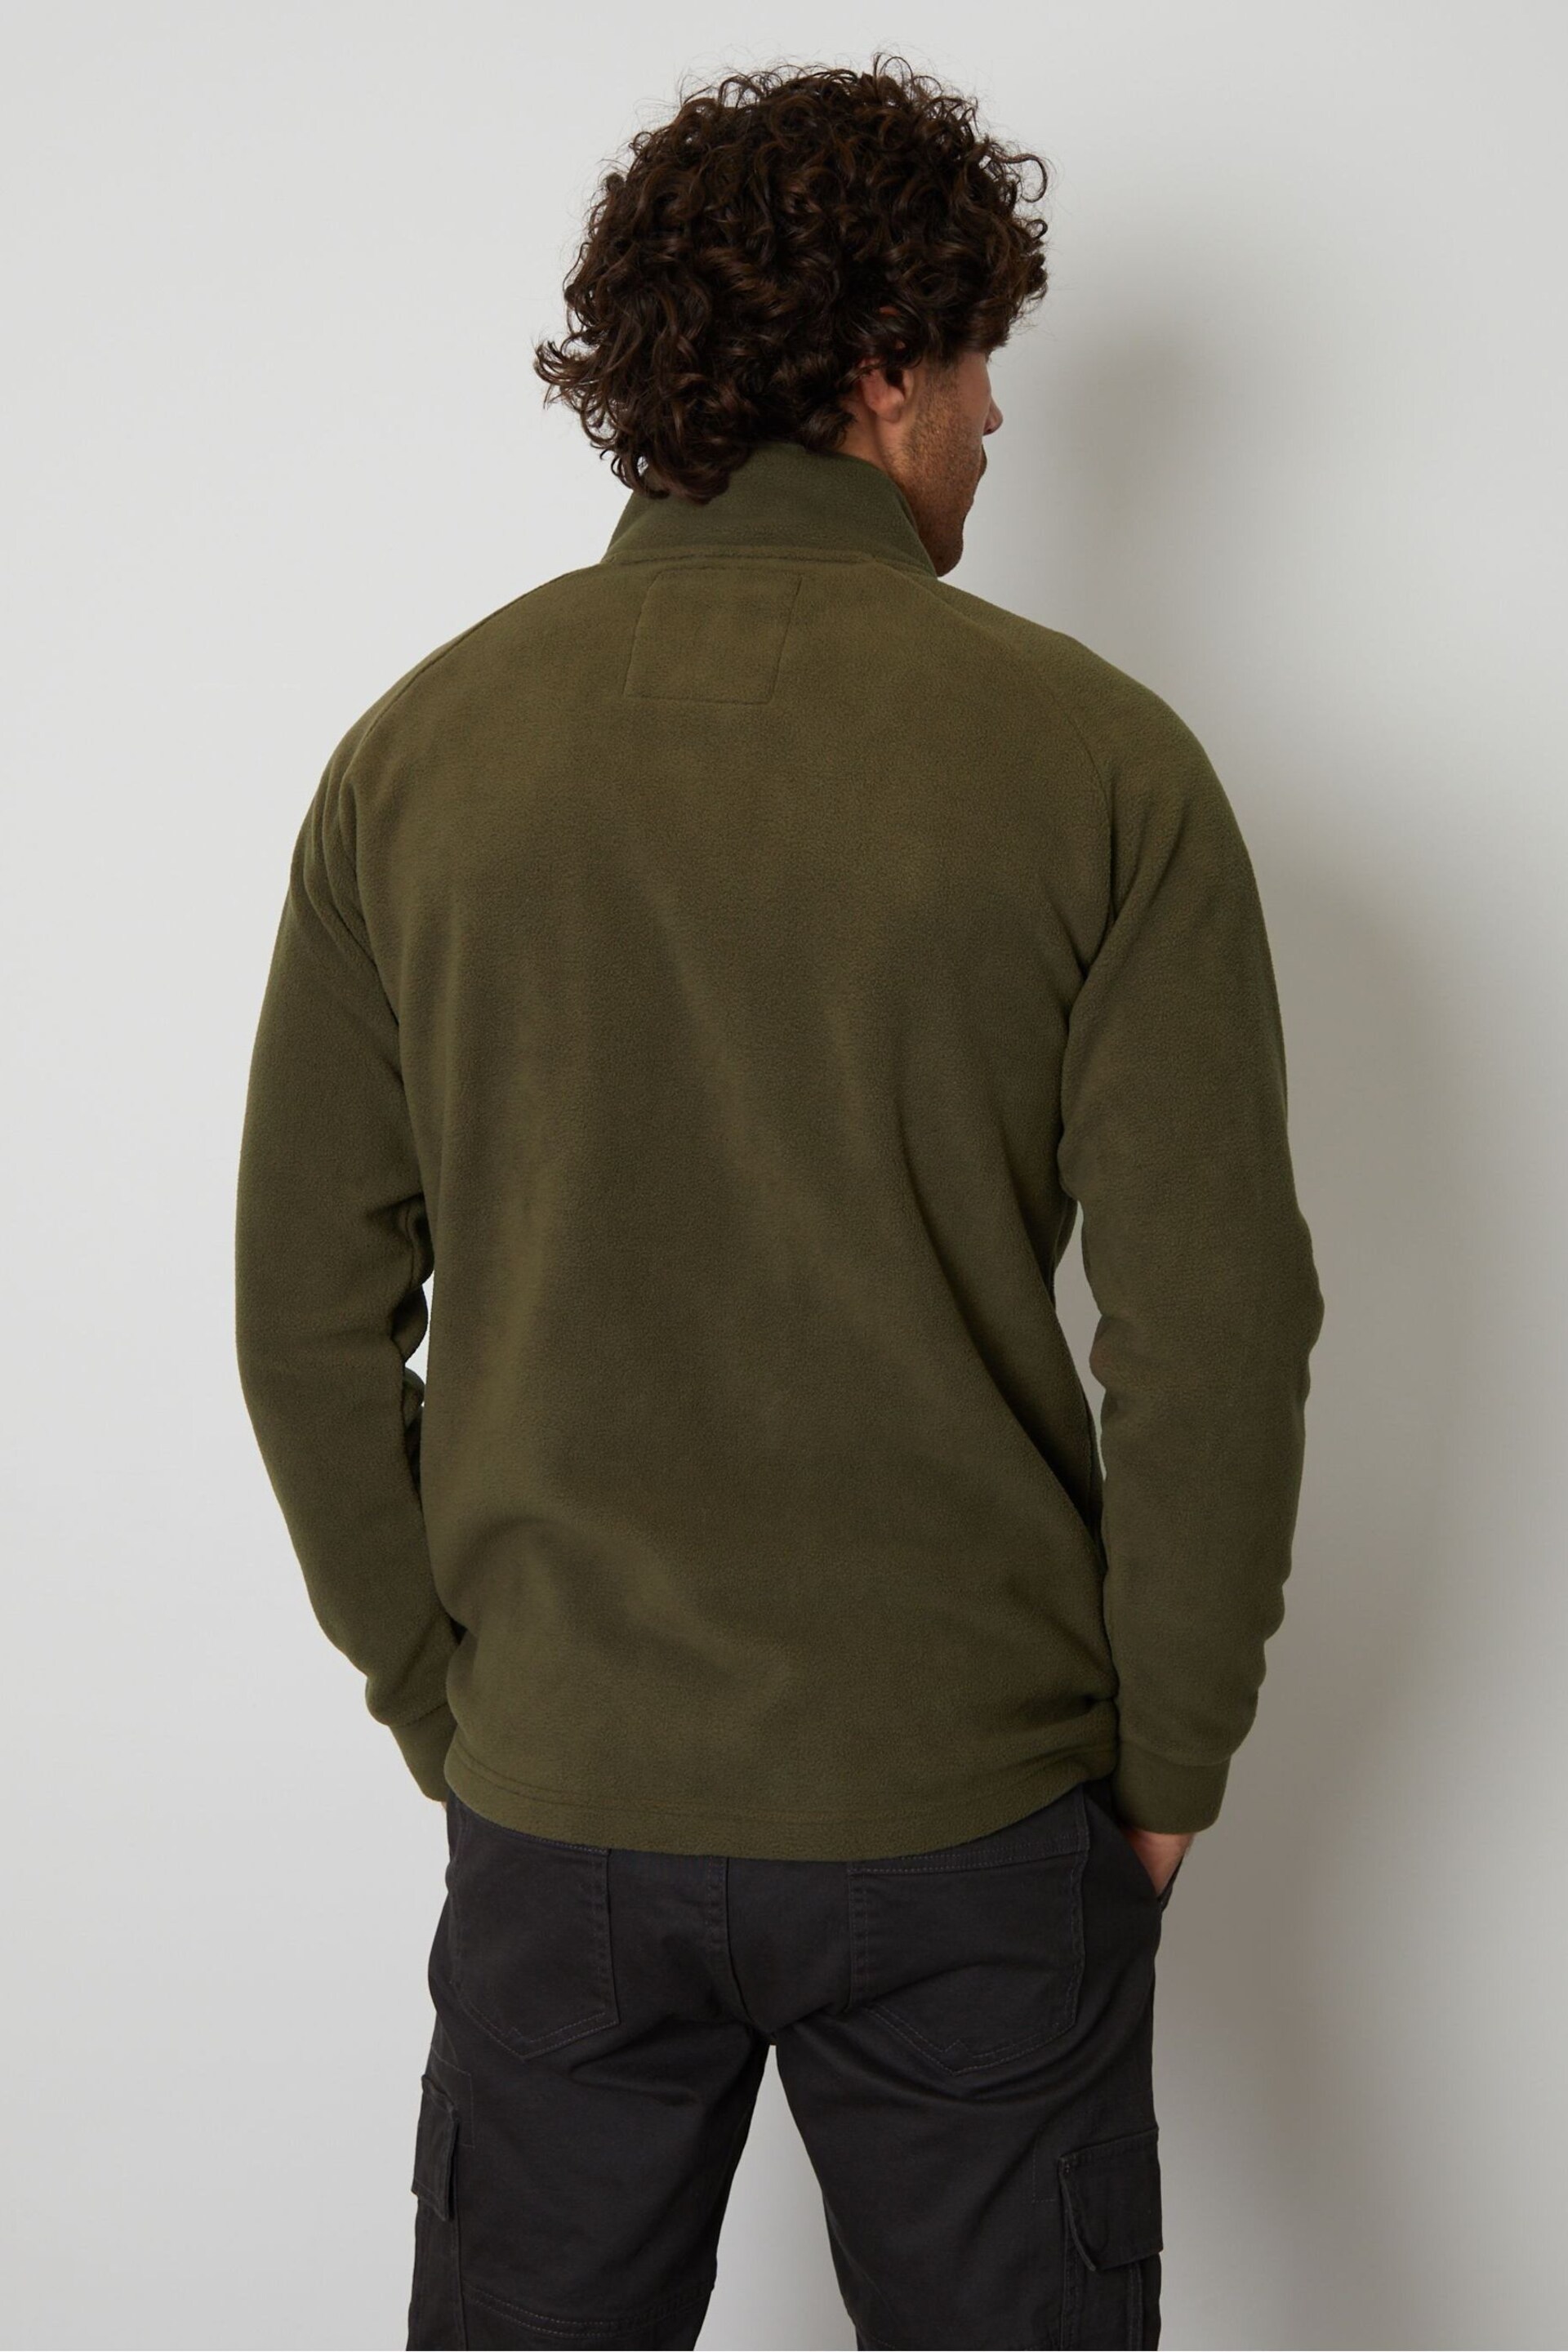 Threadbare Green Zip Up Microfleece Jacket - Image 2 of 4